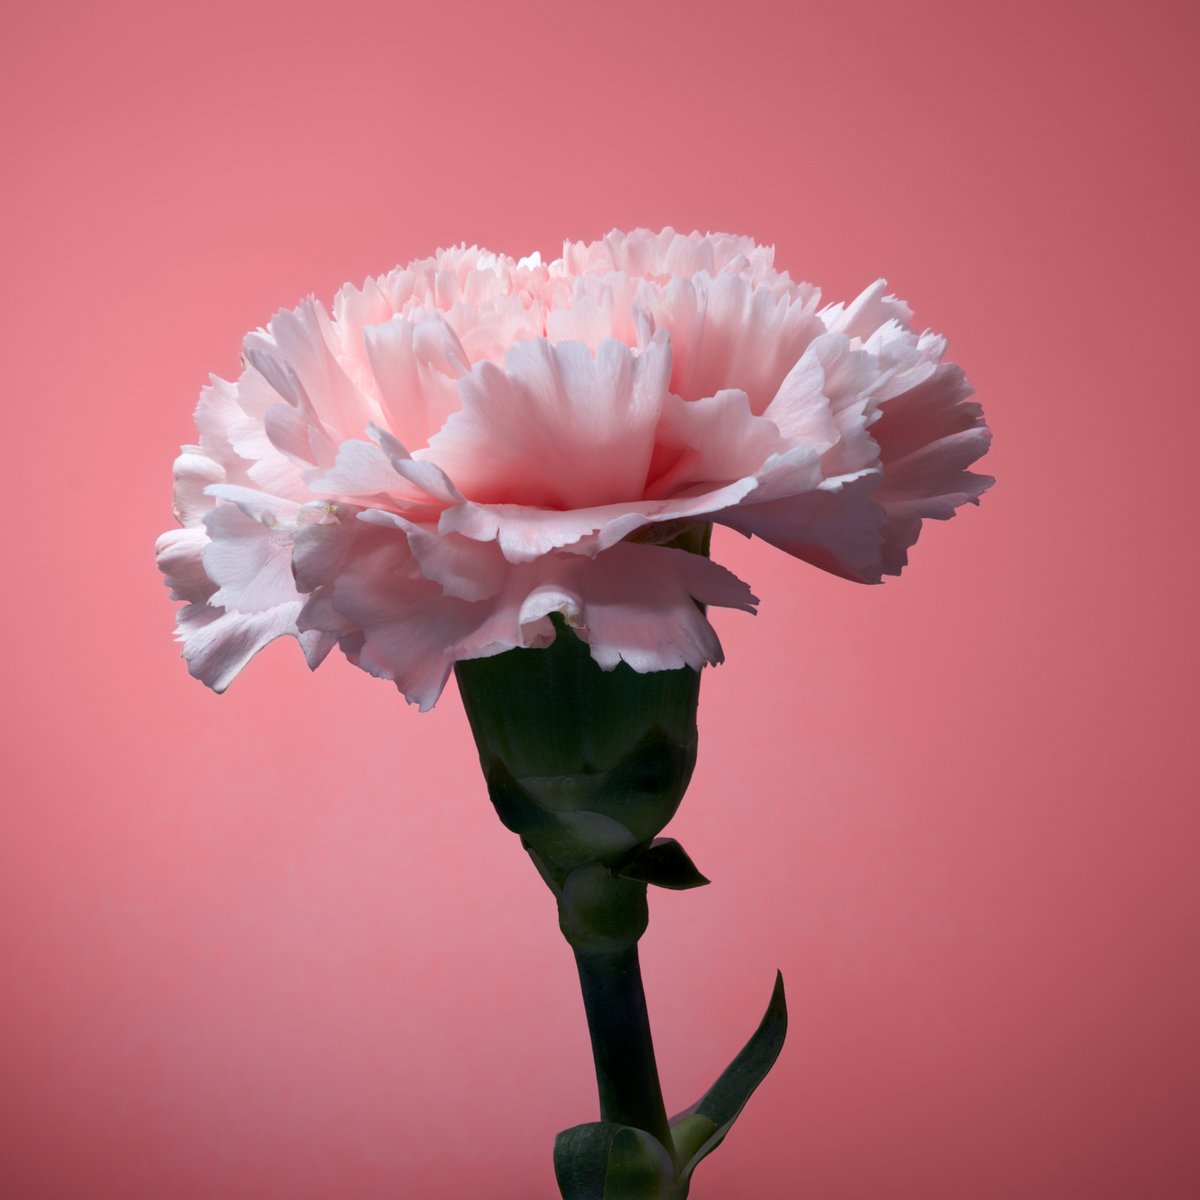 Flower photo of the day. Pink Carnation. #macro #flowers #bloemenfotografie #flowersandmacro #bloemen #blumen #fleurs #raw_flowers #snap_flowers